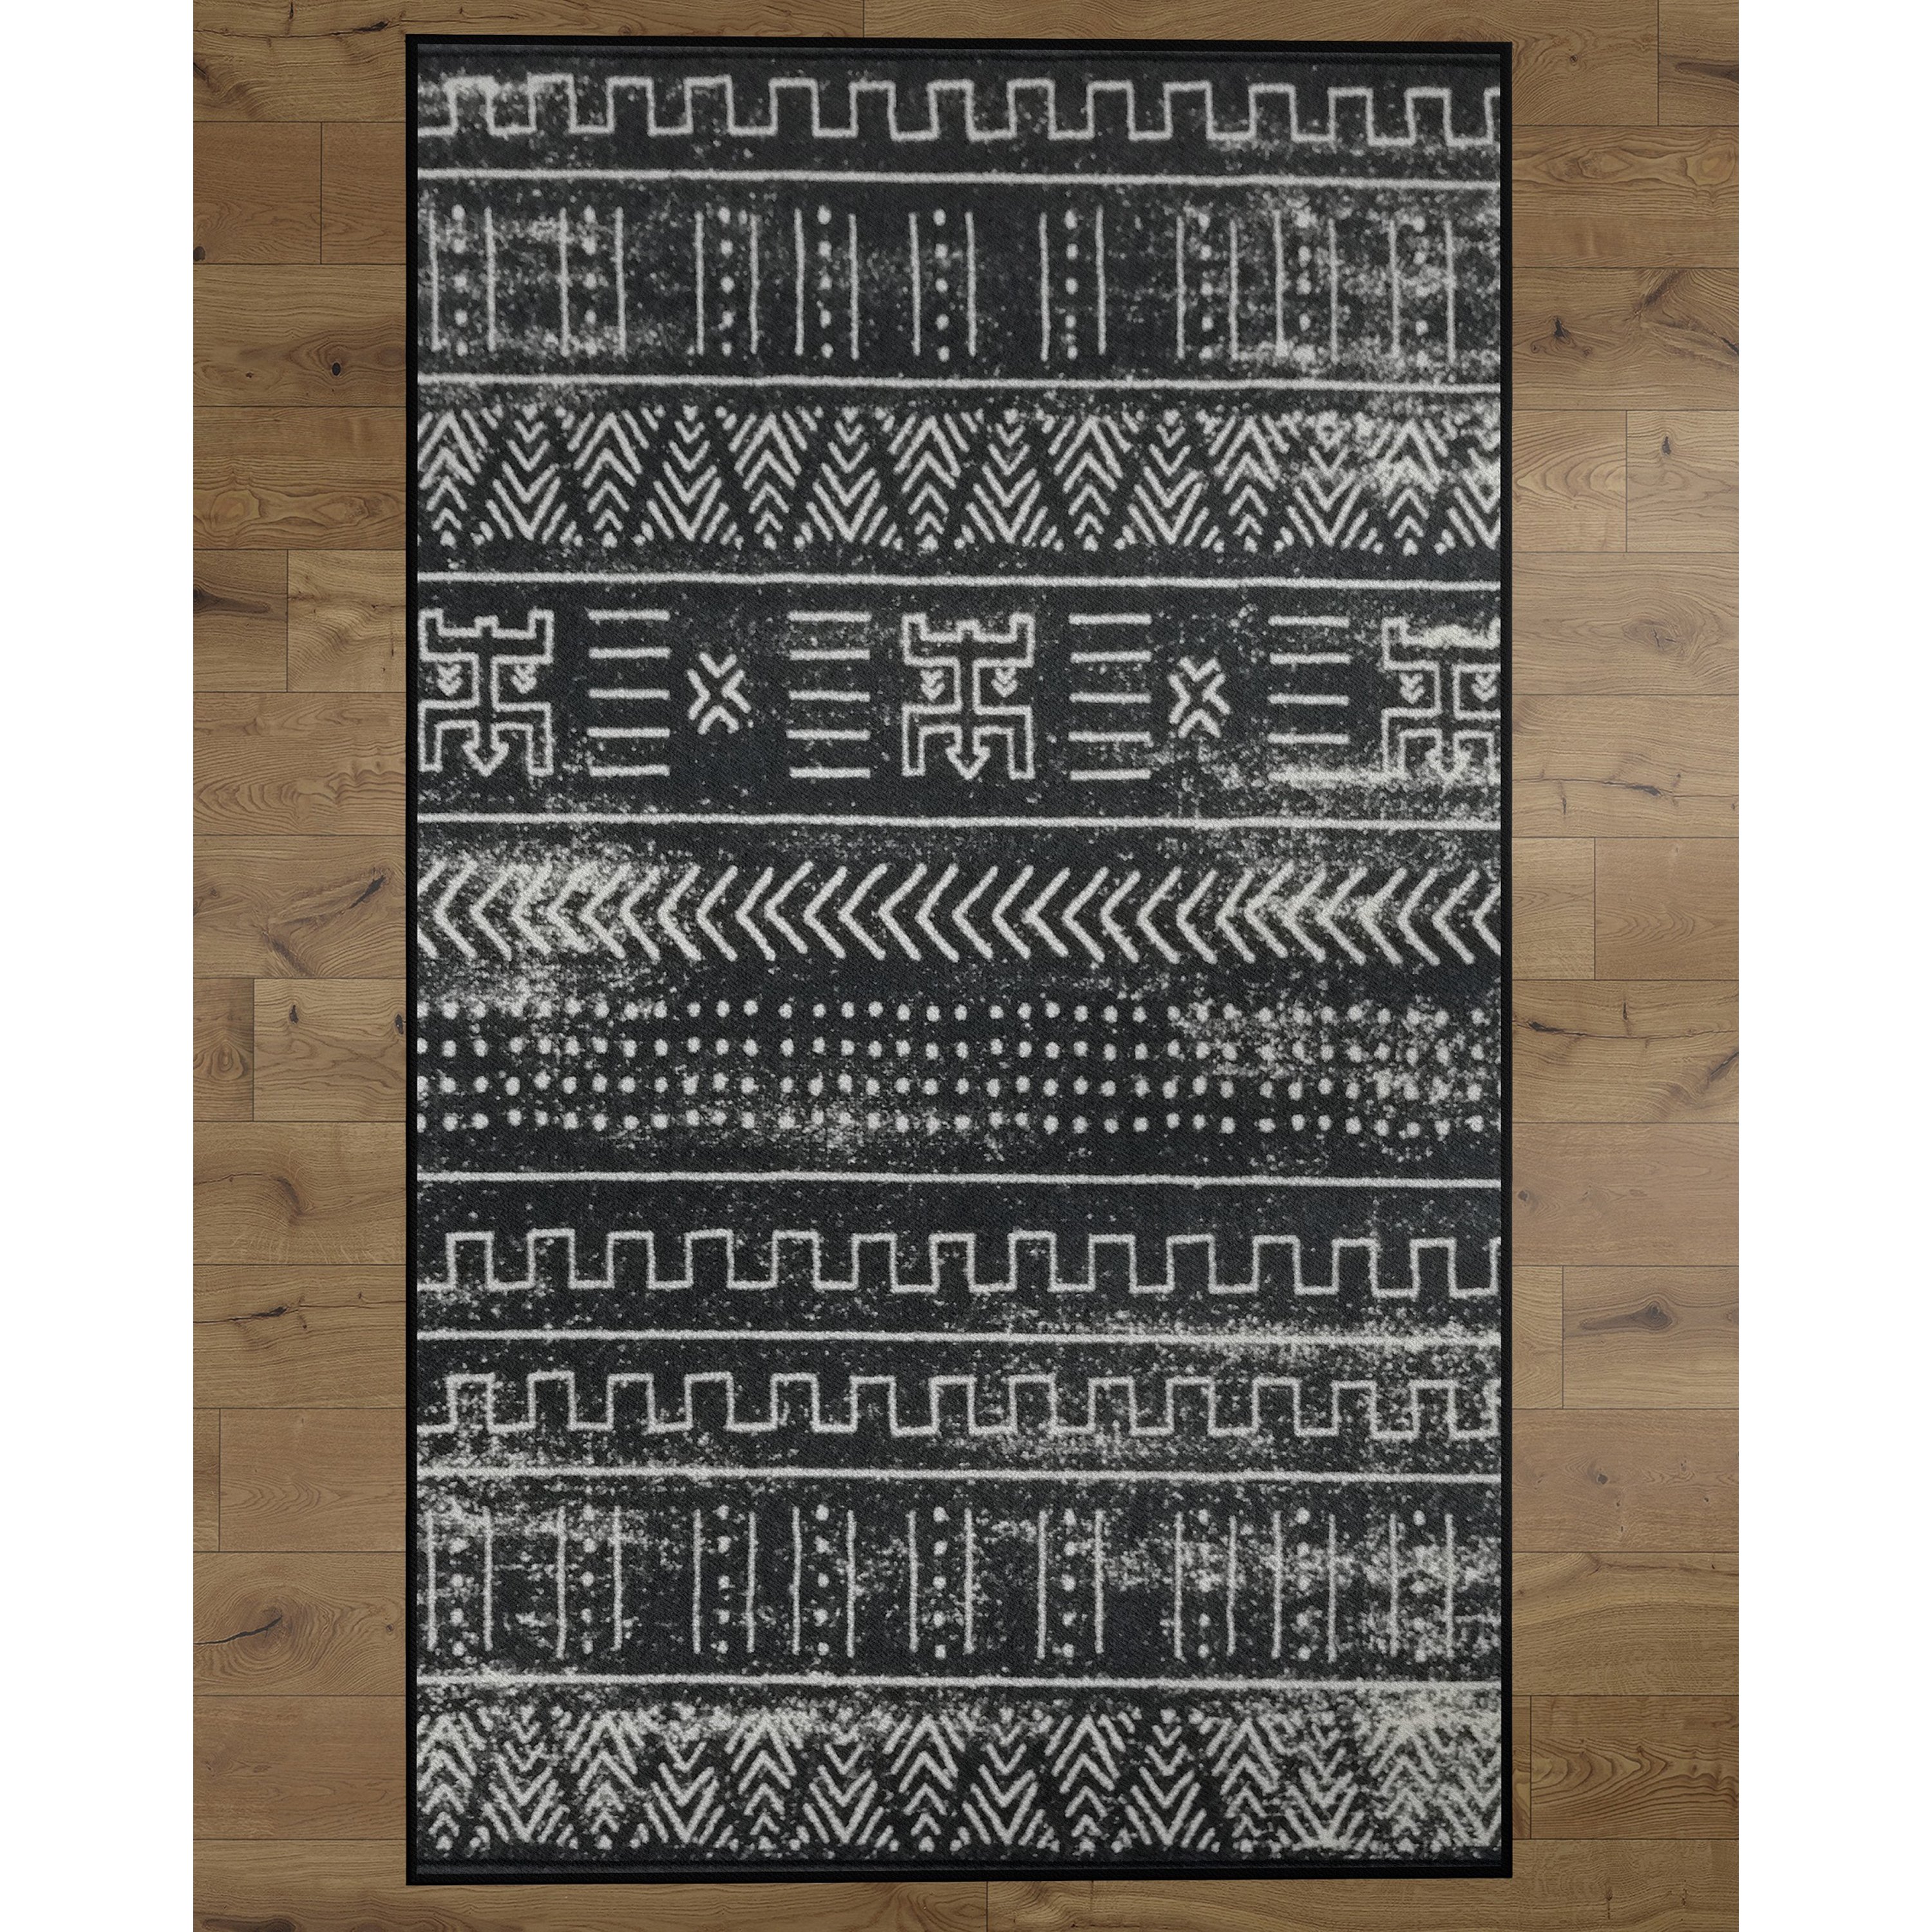 Deerlux Boho Living Room Area Rug With Nonslip Backing, Black Tribal Pattern - 5x7